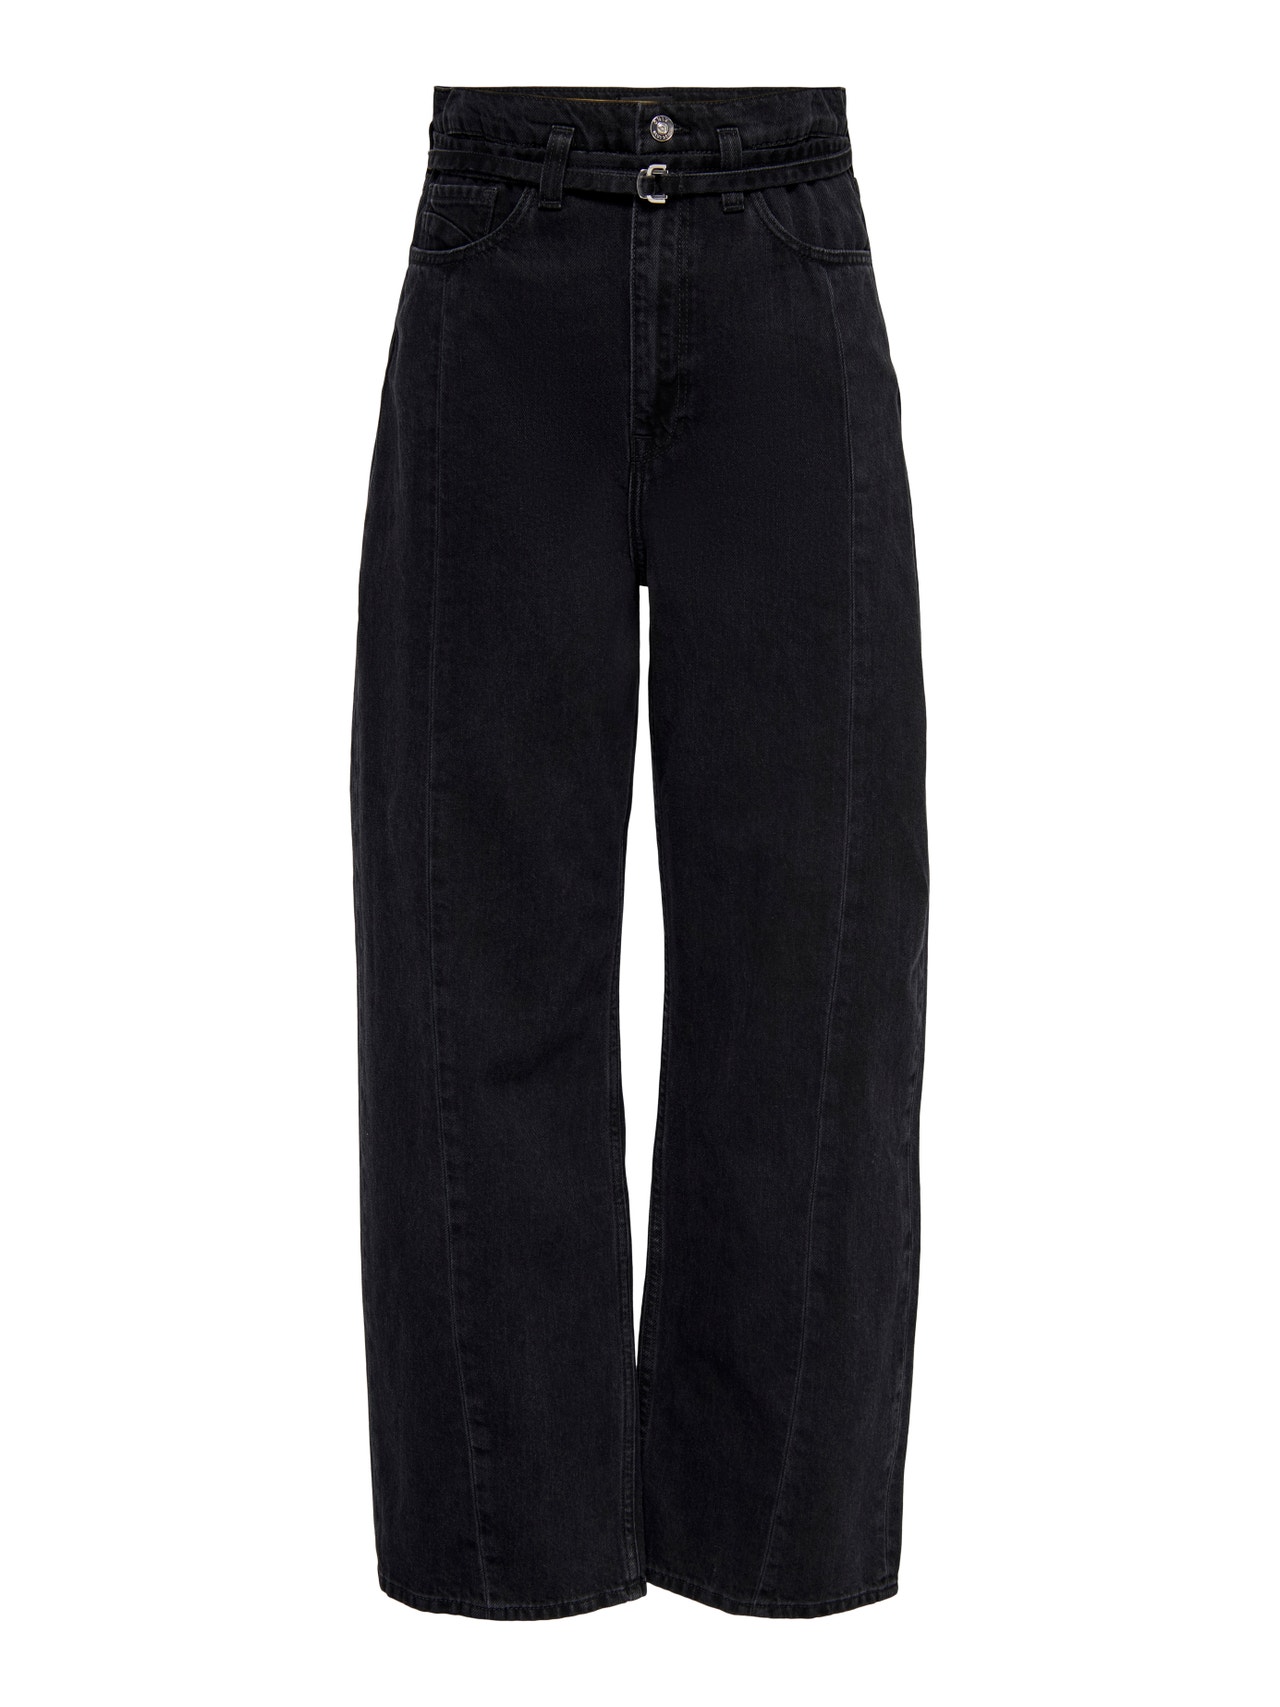 ONLY Karotte, locker geschnitten Jeans -Washed Black - 15274872